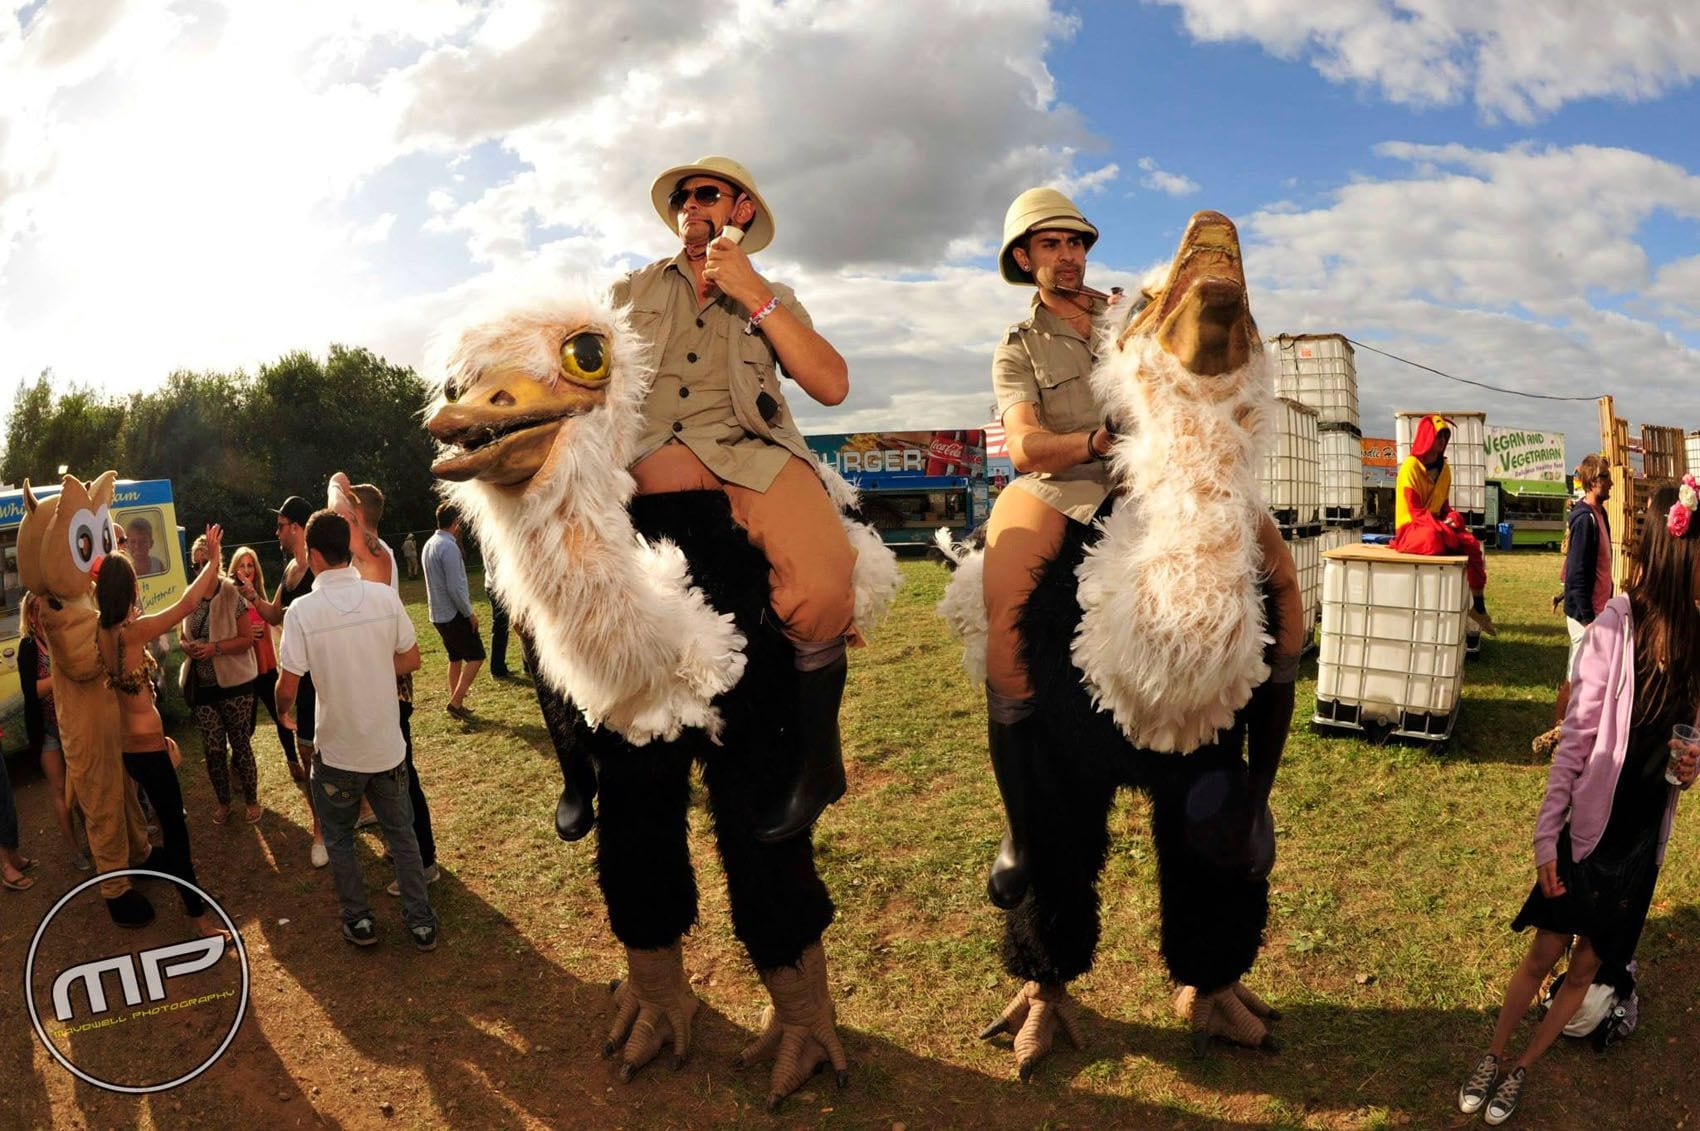 ostrich riders